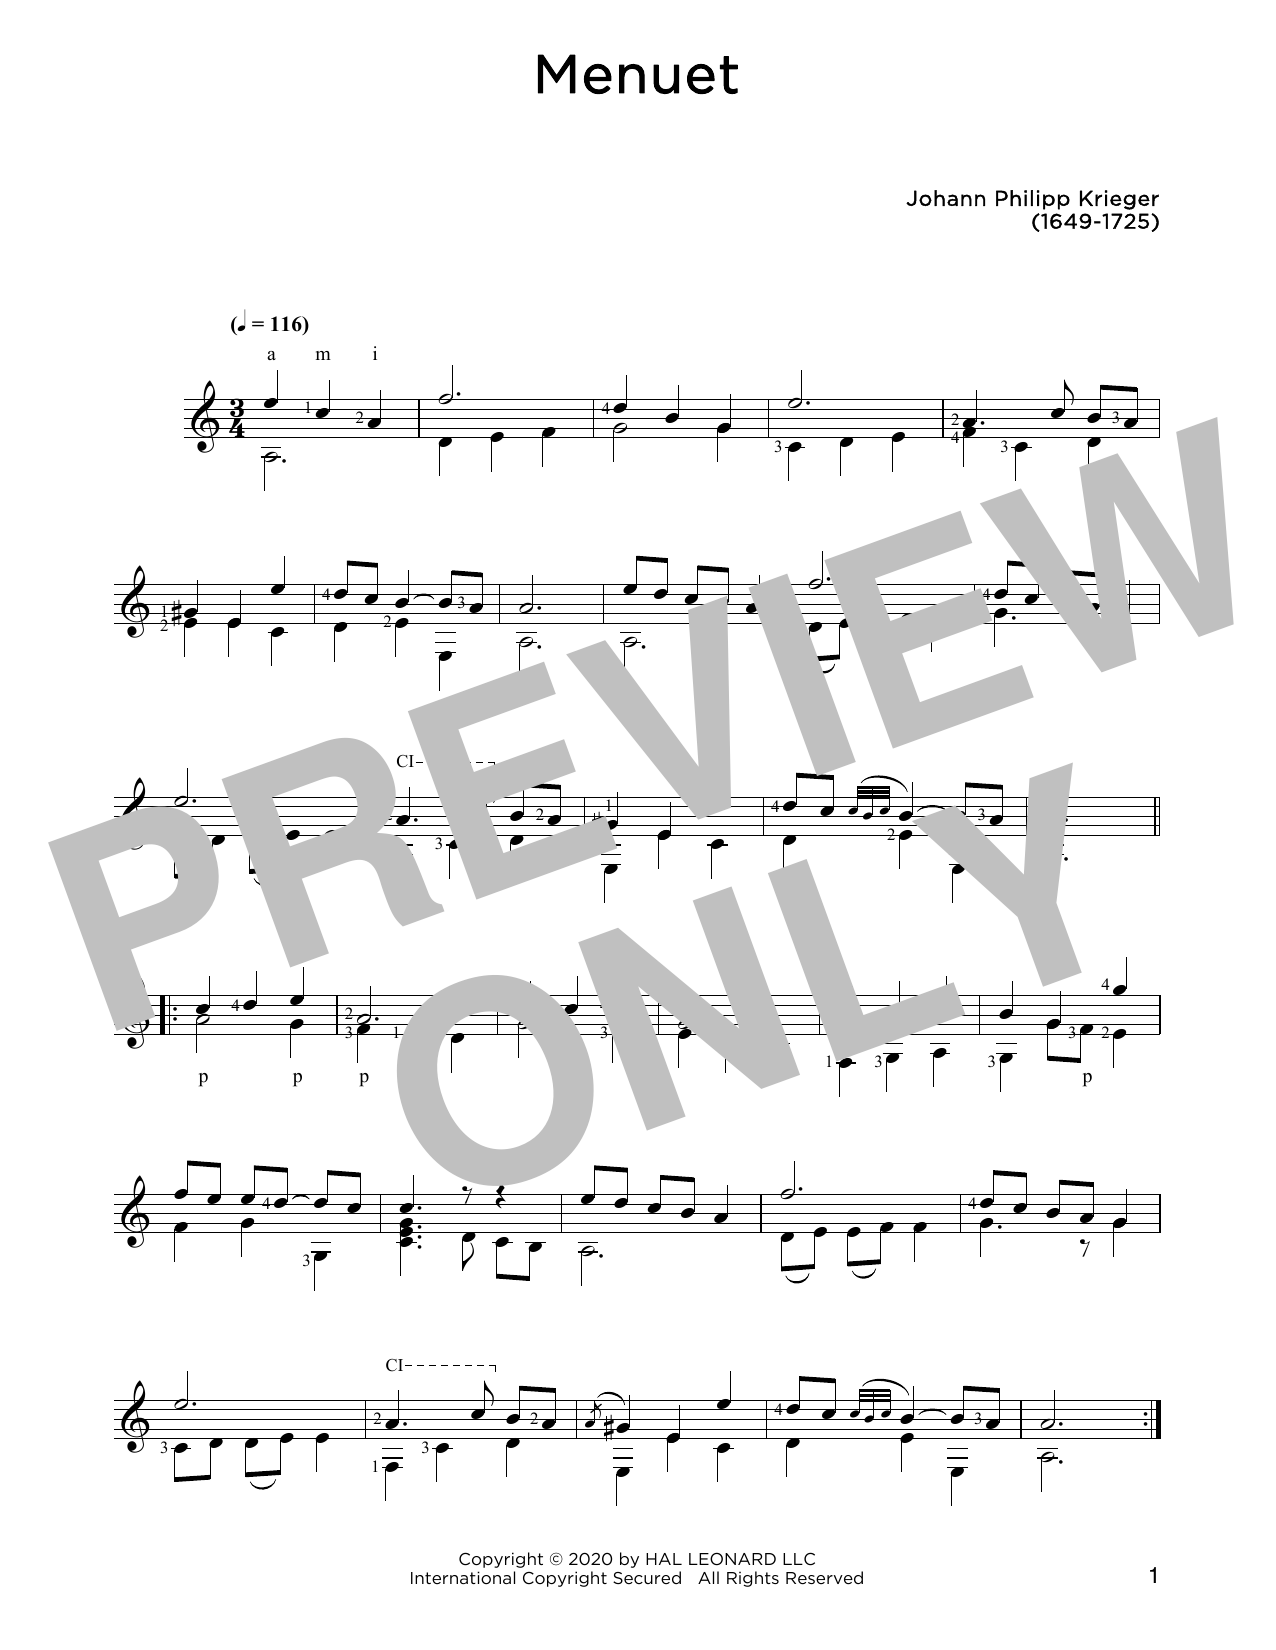 Johann Krieger Menuet Sheet Music Notes & Chords for Solo Guitar - Download or Print PDF